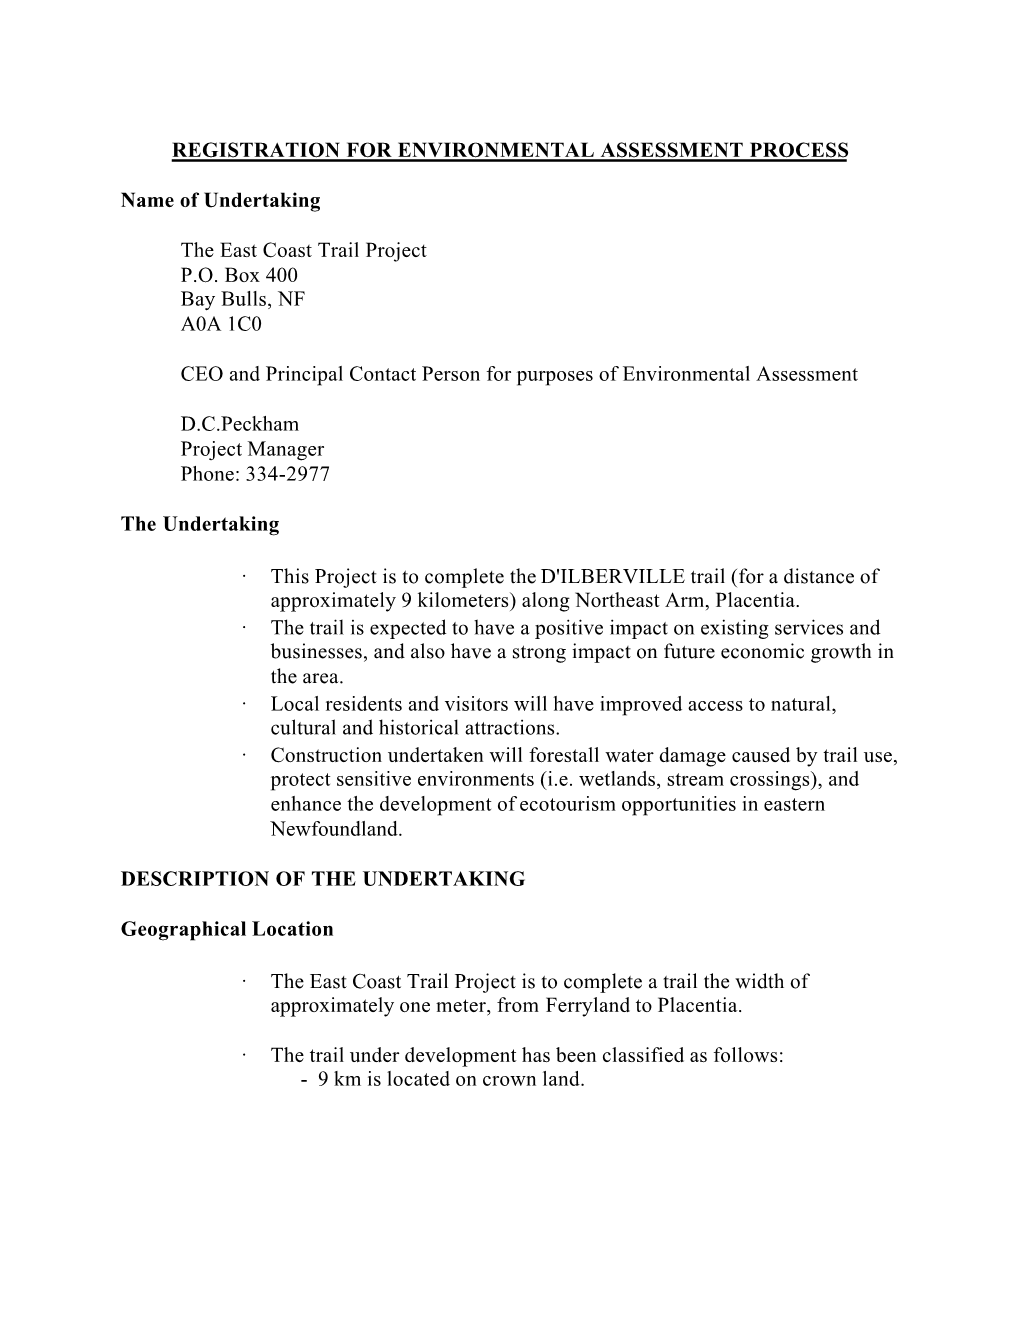 Registration for Environmental Assessment Process